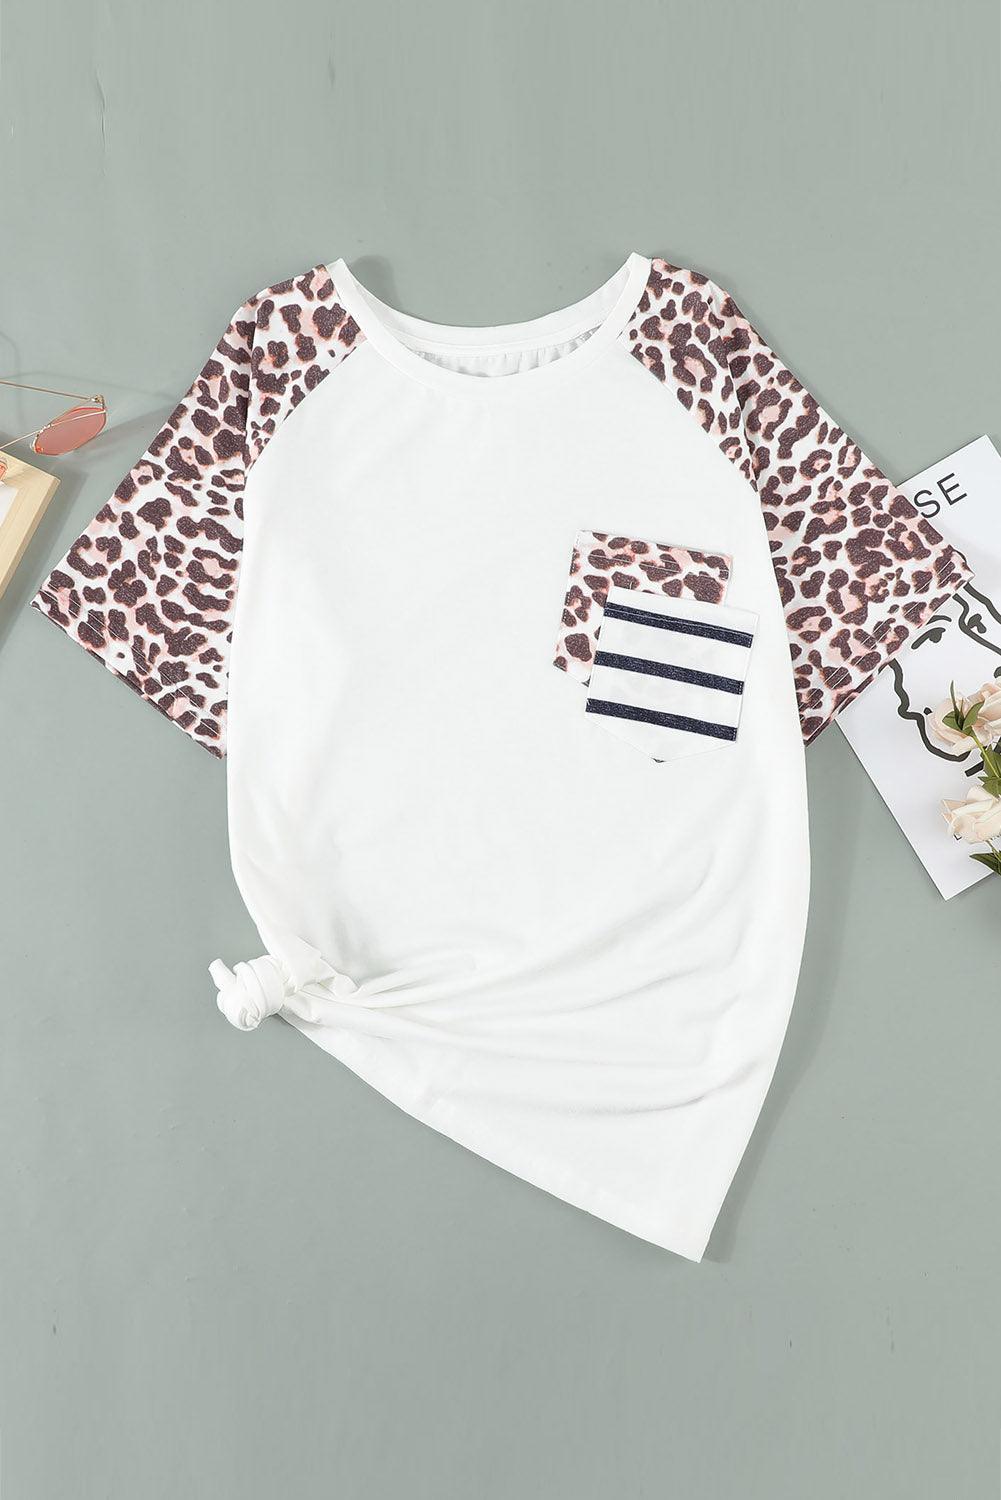 Plus Size Mixed Print Contrast Tee Shirt - BELLATRENDZ